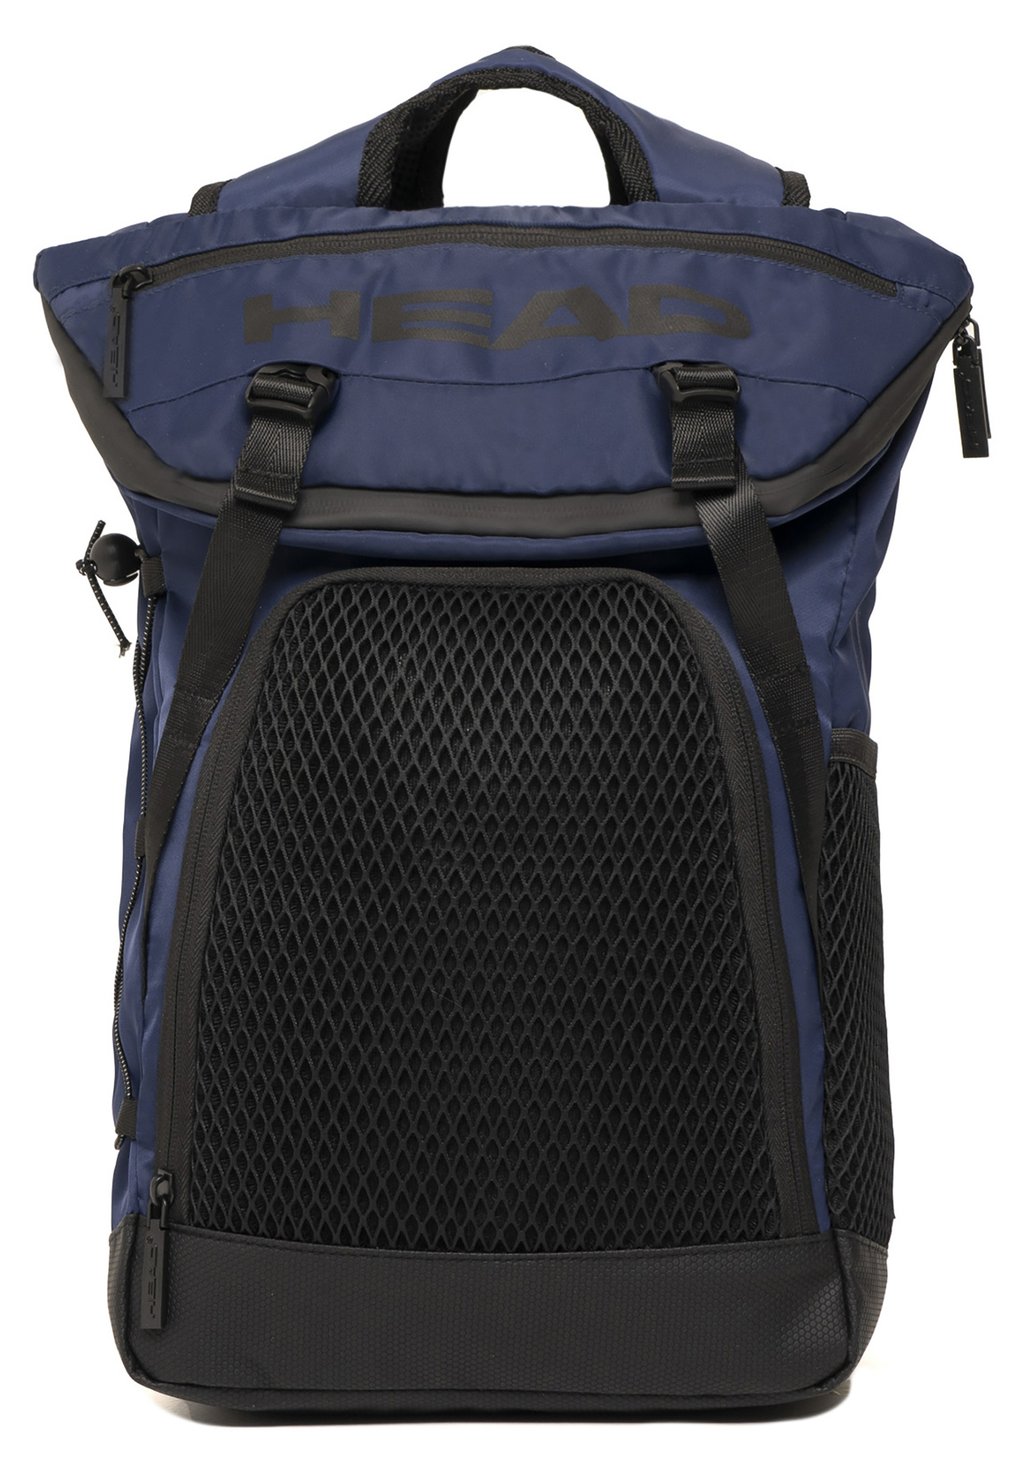 Рюкзак NET VERTICAL Head, цвет marineblau рюкзак для путешествий head net vertical темно синий